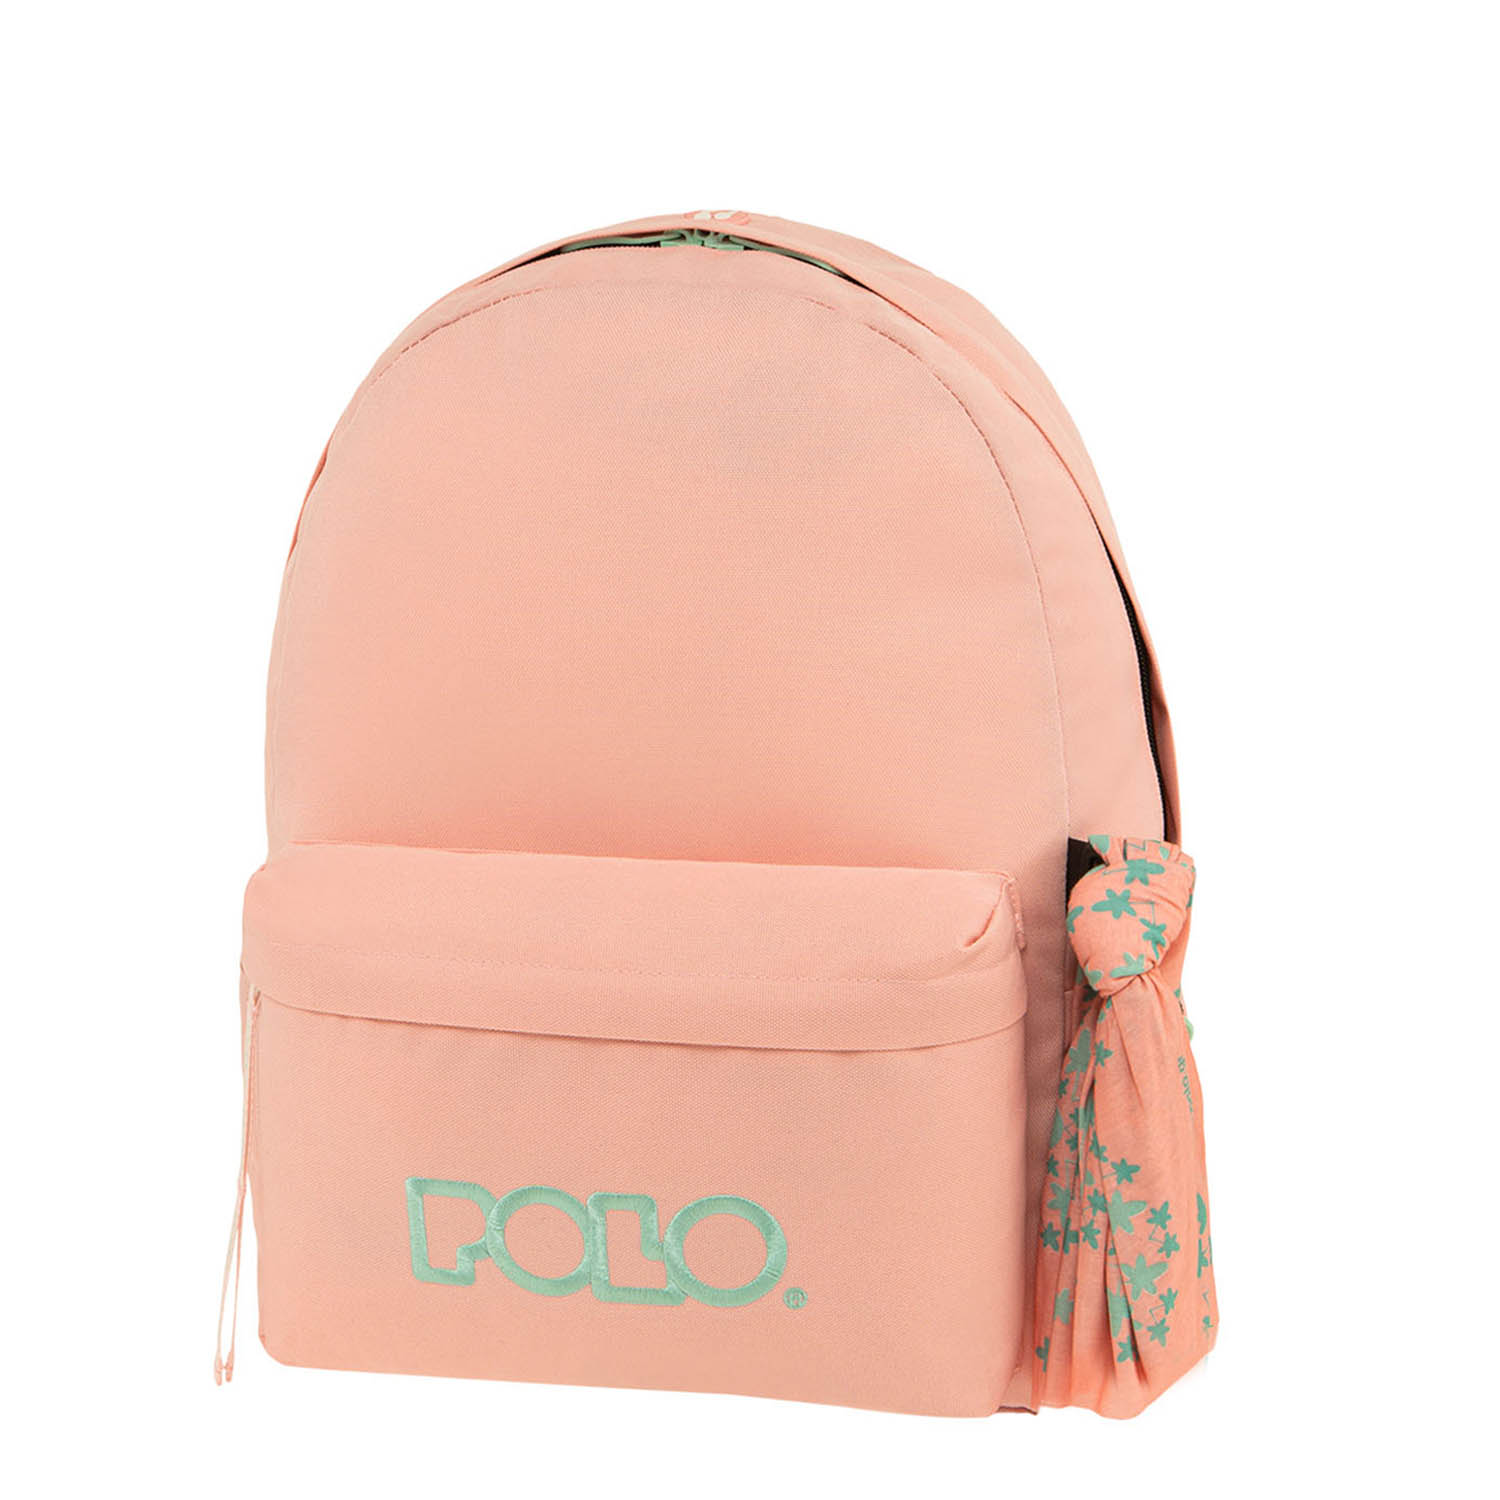 Polo - Original Σακίδιο Πλάτης Με Μαντήλι, Pink-Turquoise 2024 9-01-135-3959 + Δώρο Διορθωτική Ταινία Edding